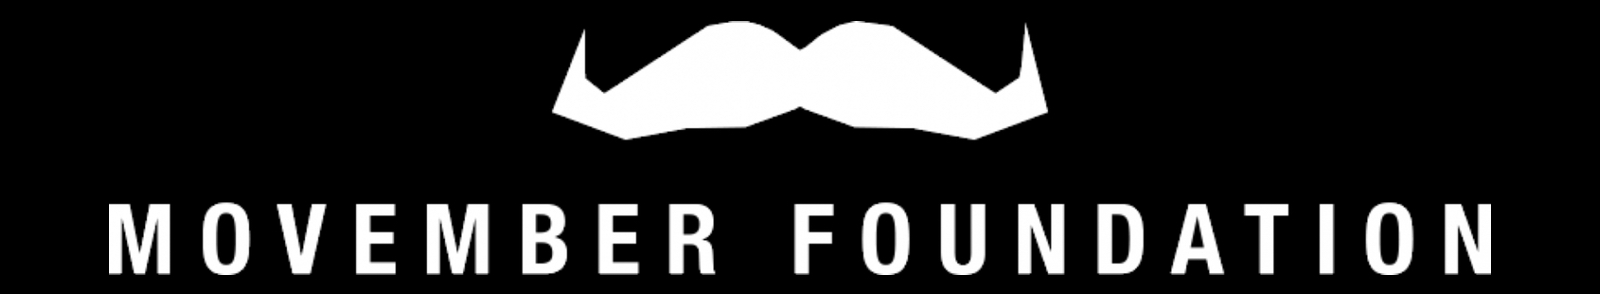 Movember Foundation 2017